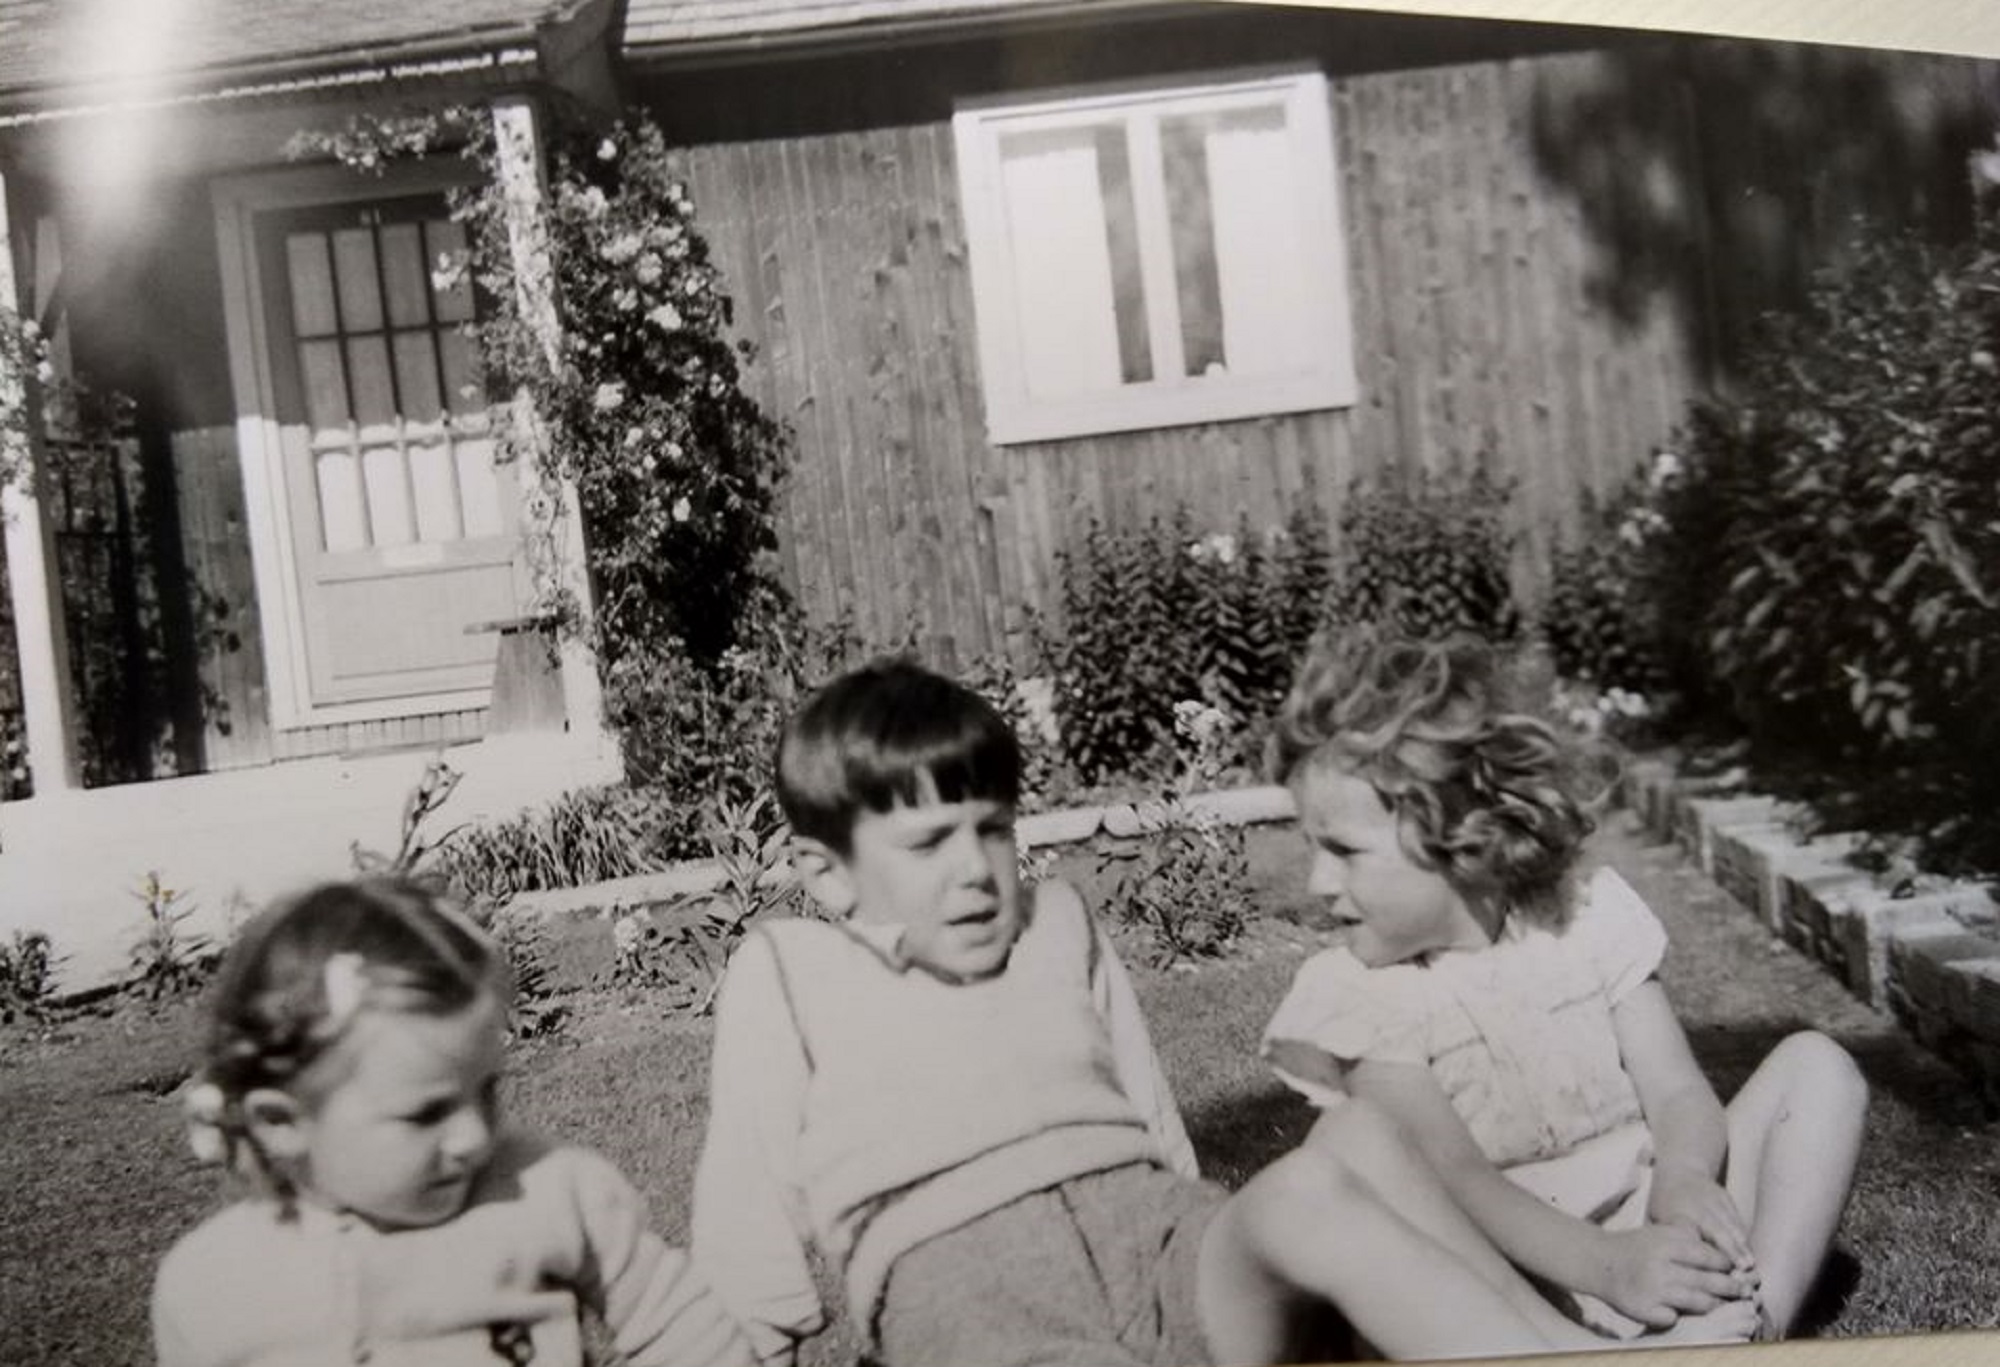 Us three Brockbank kids in the front garden. Swallow Street, Iver Heath, Buckinghamshire